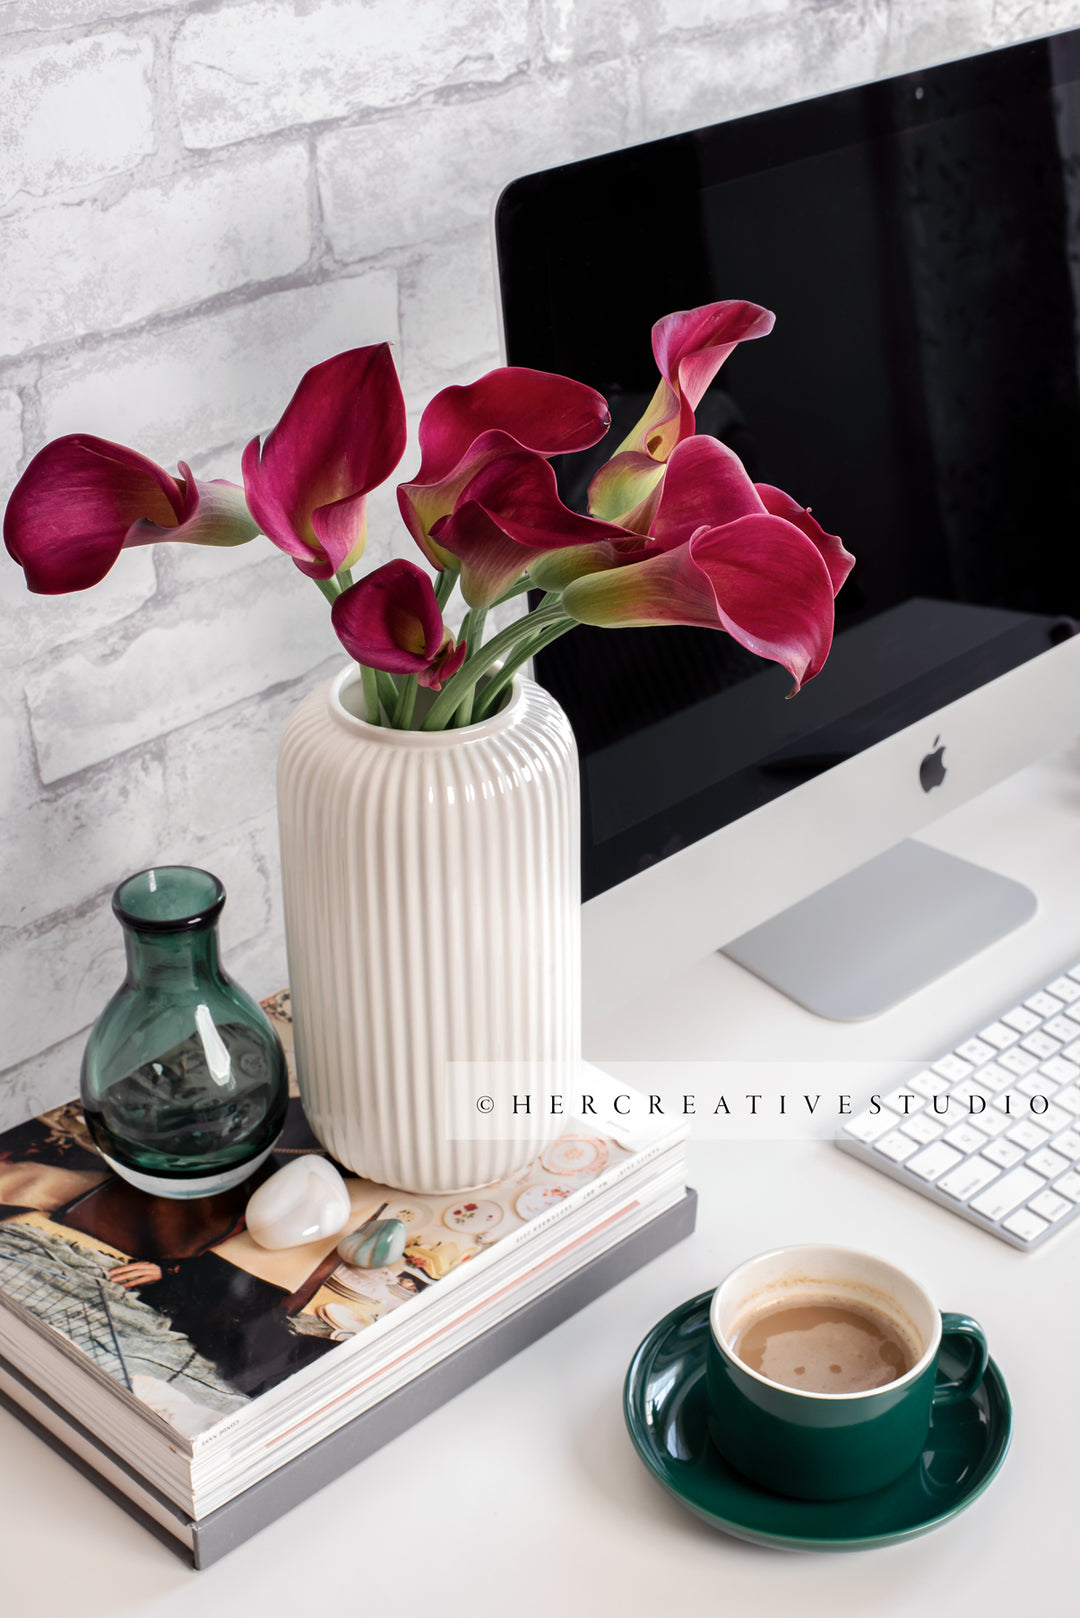 Calla Lillies & Coffee on Desktop. Stock Photo.